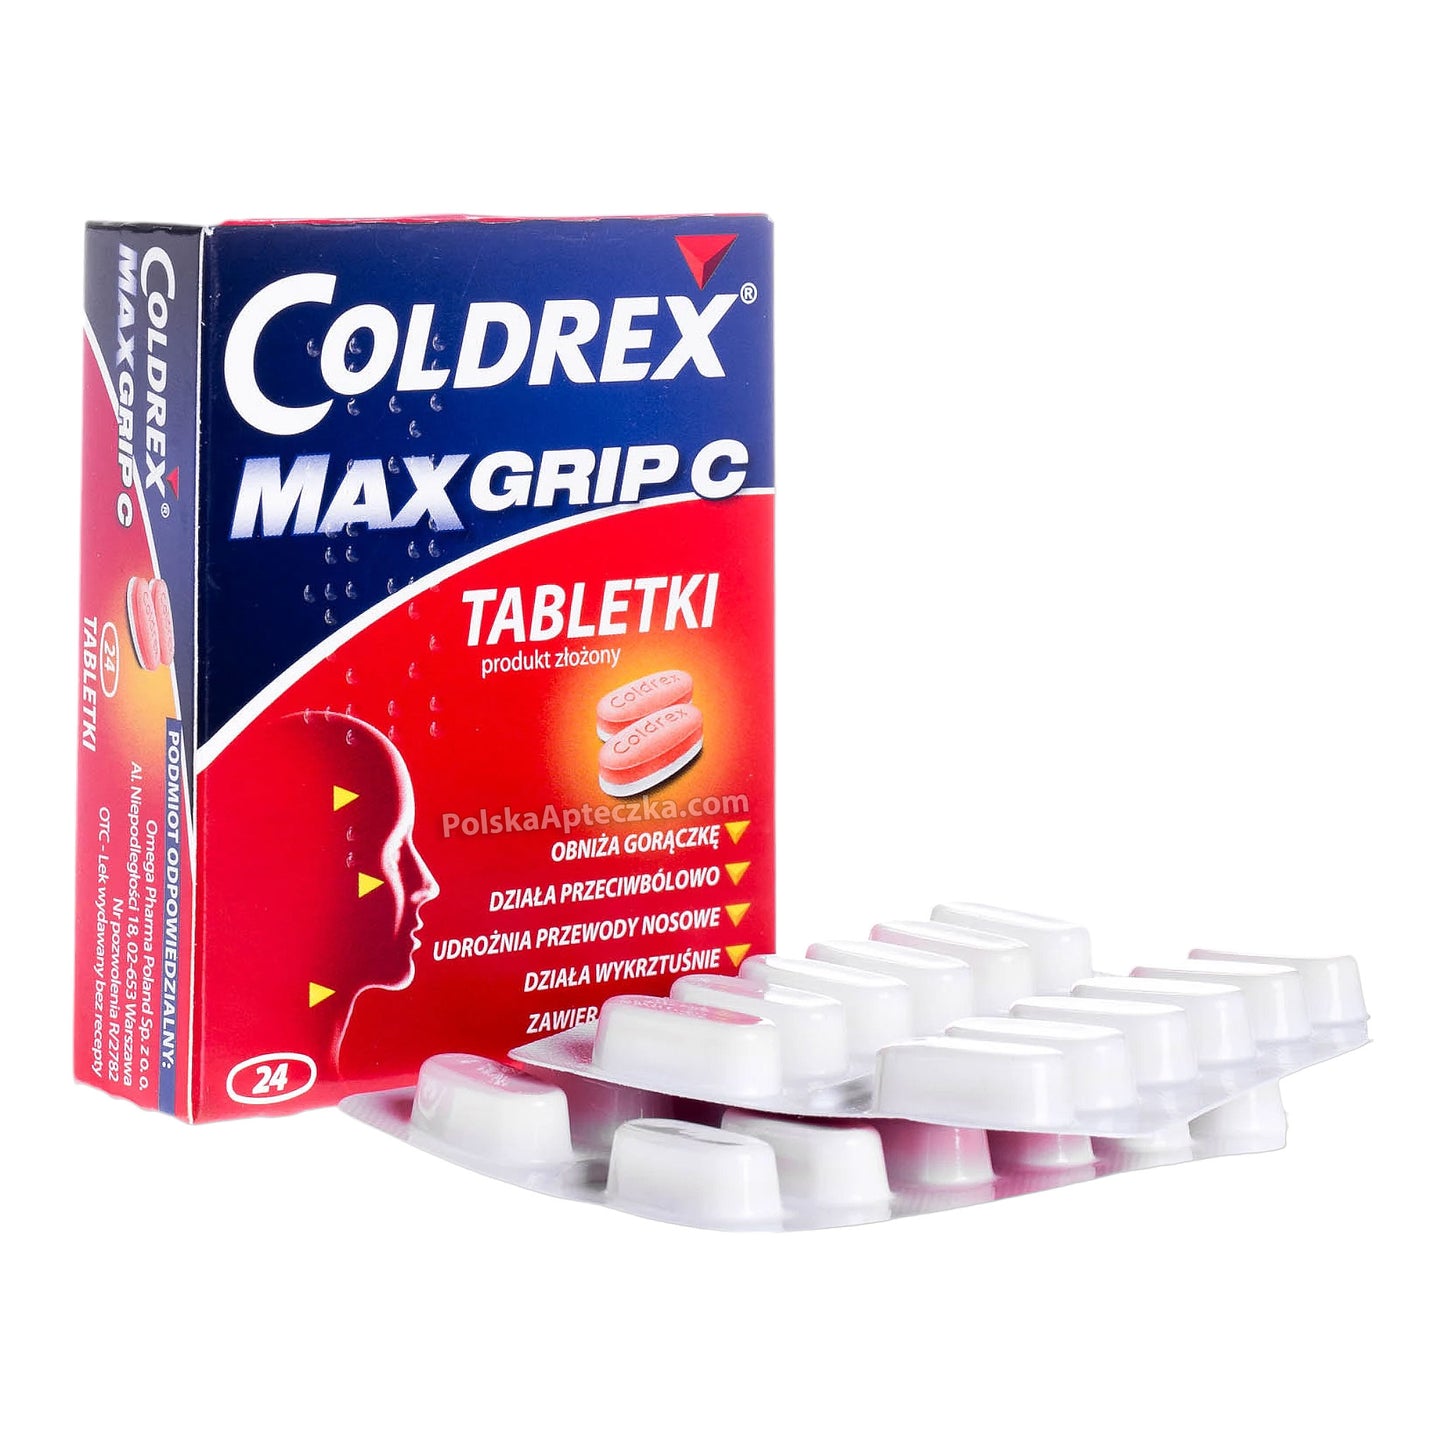 Coldrex Max Grip C tabletki